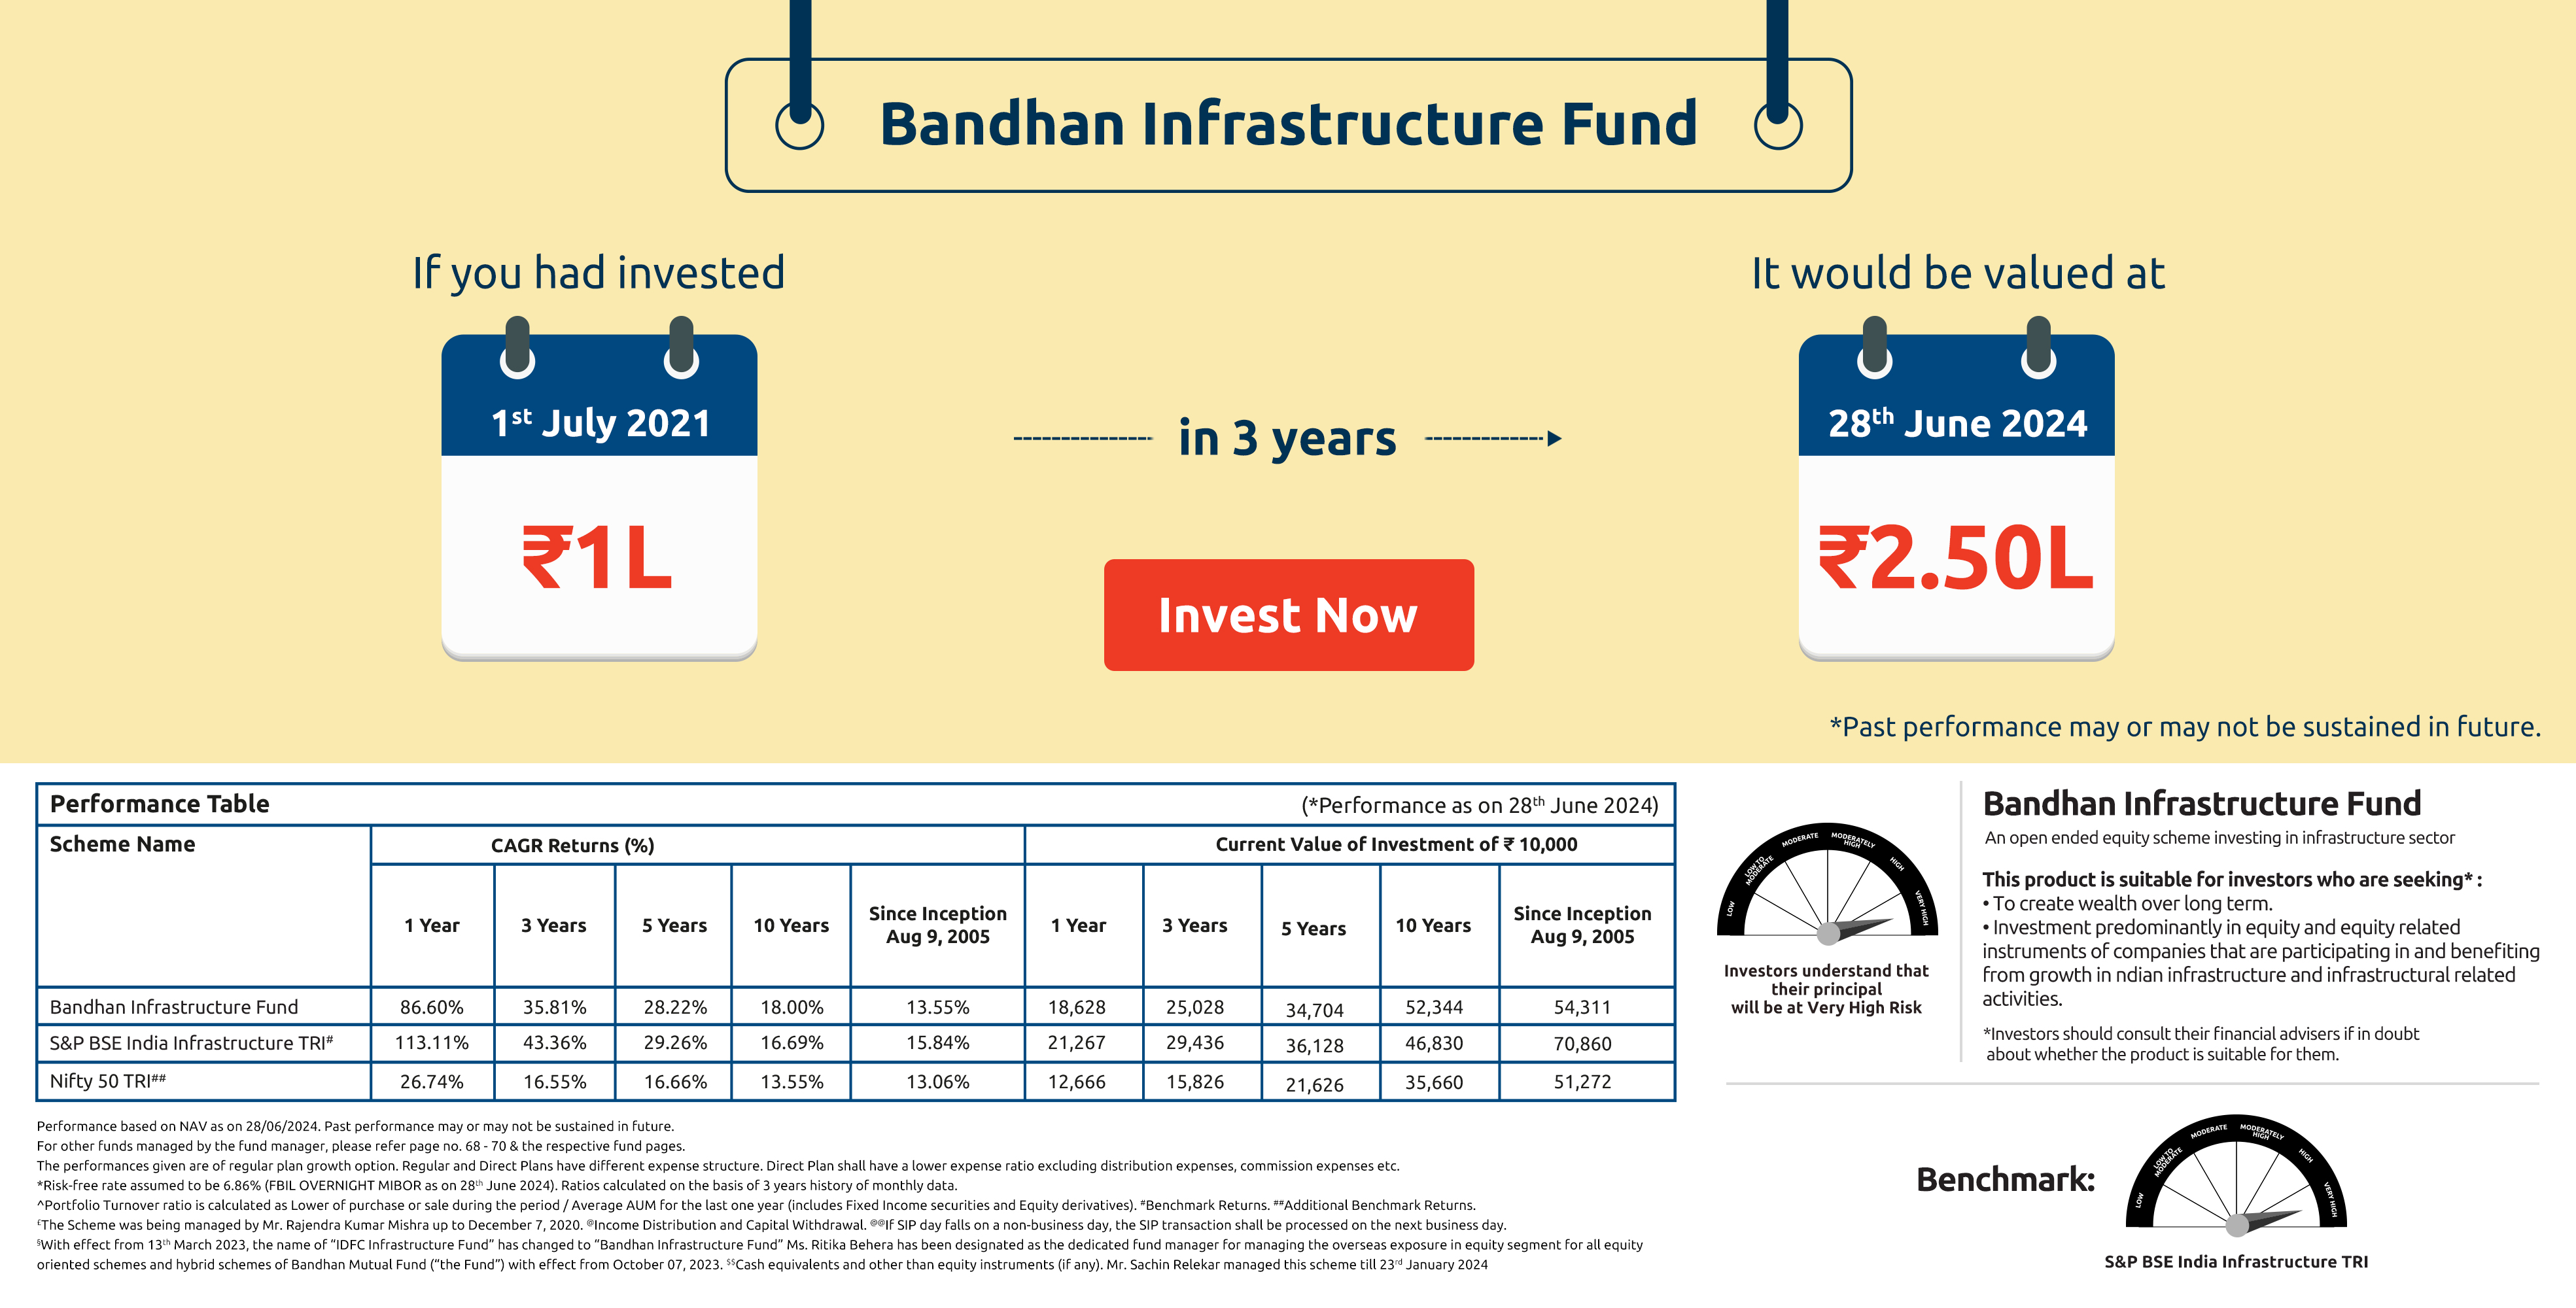 Bandhan Infrastructure Fund